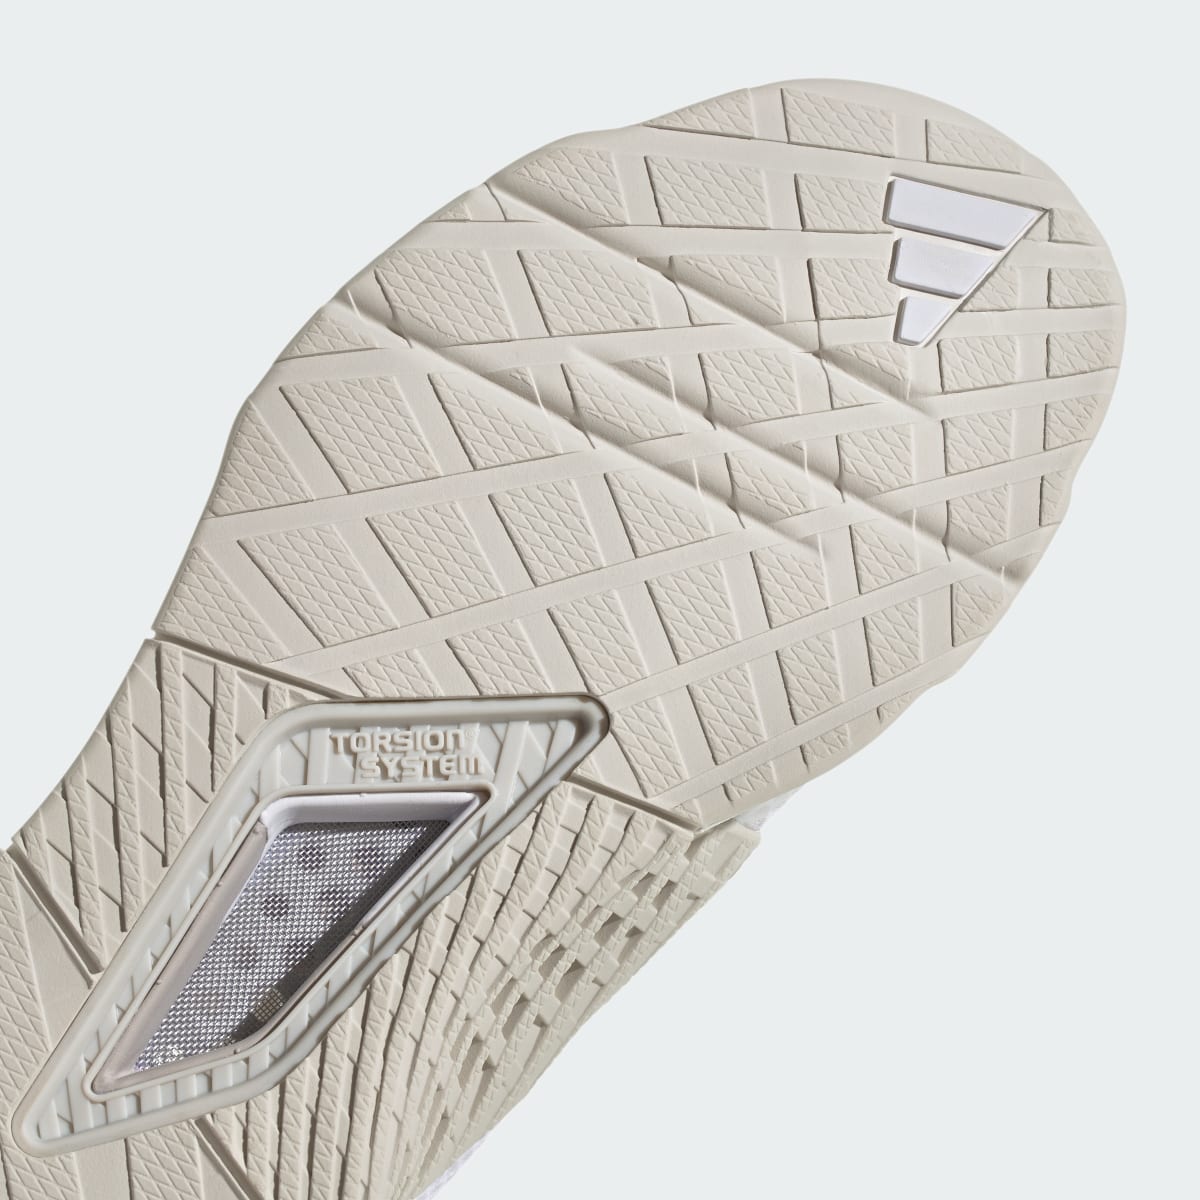 Adidas Scarpe Dropset 2. 9